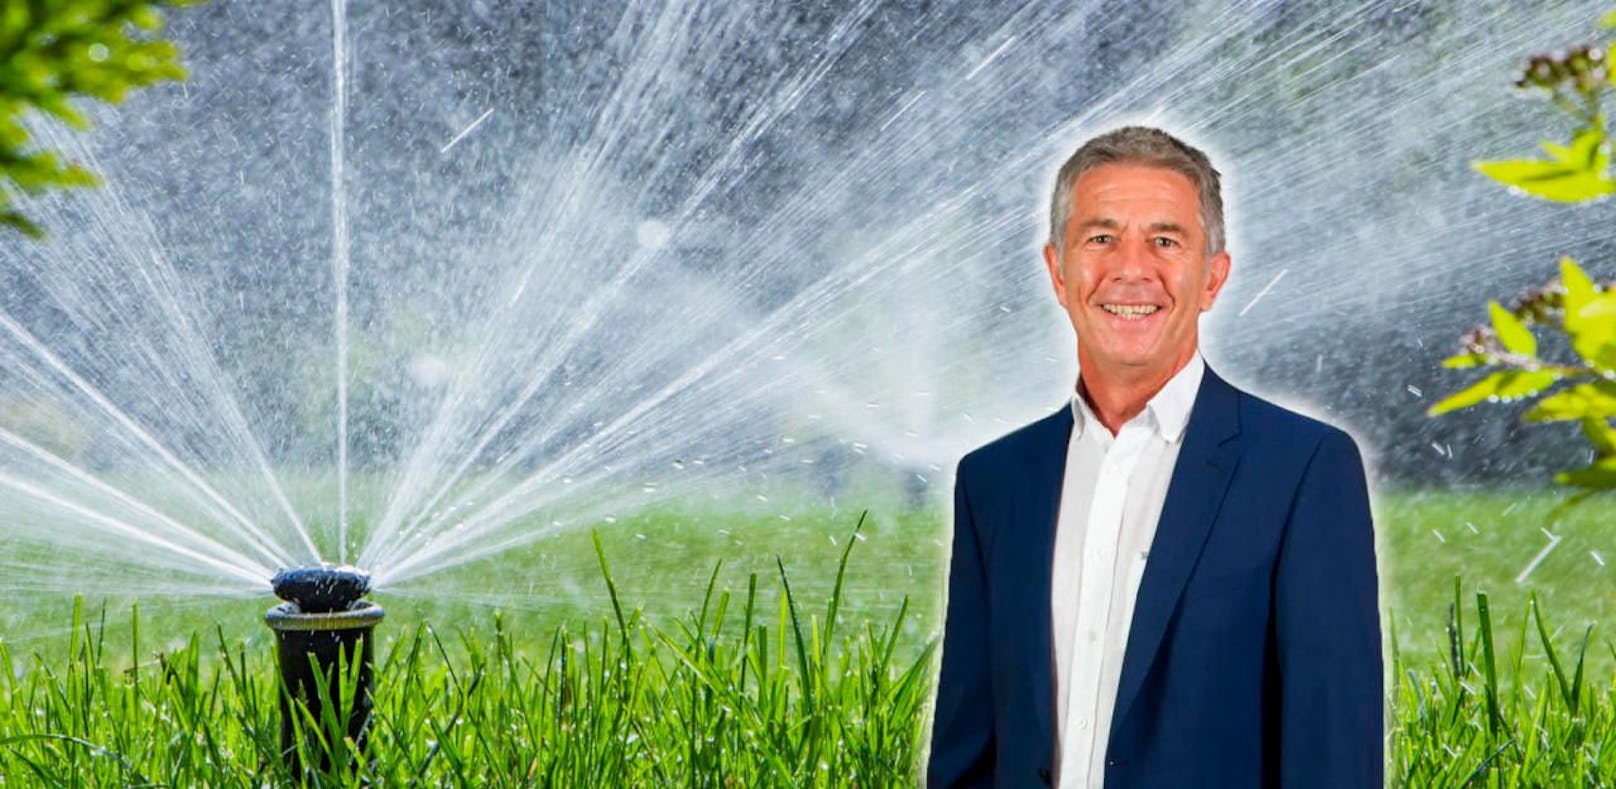 Bürgermeister Günter Engertsberger mahnt seine Mitbürger, Wasser zu sparen.